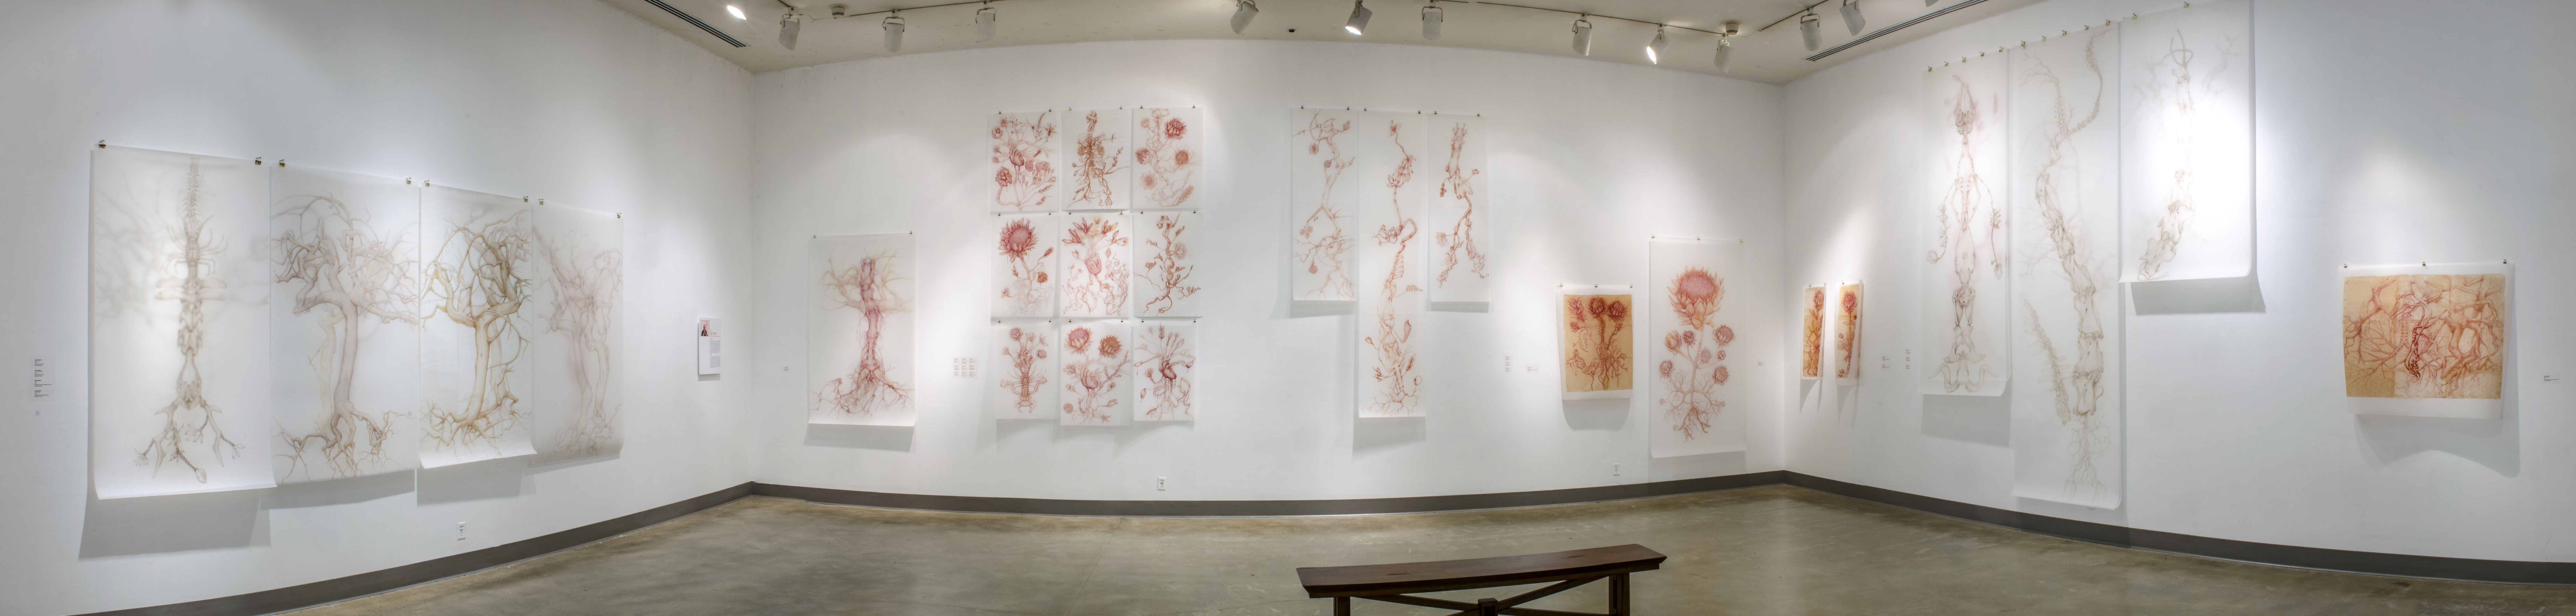 Installation View, Front East Gallery, Ann Bingham-Freeman, Kerry Kugelman, Meriel Stern & Jamie Sweetman Exhibition, Jan 11 - Feb 22, 2014.